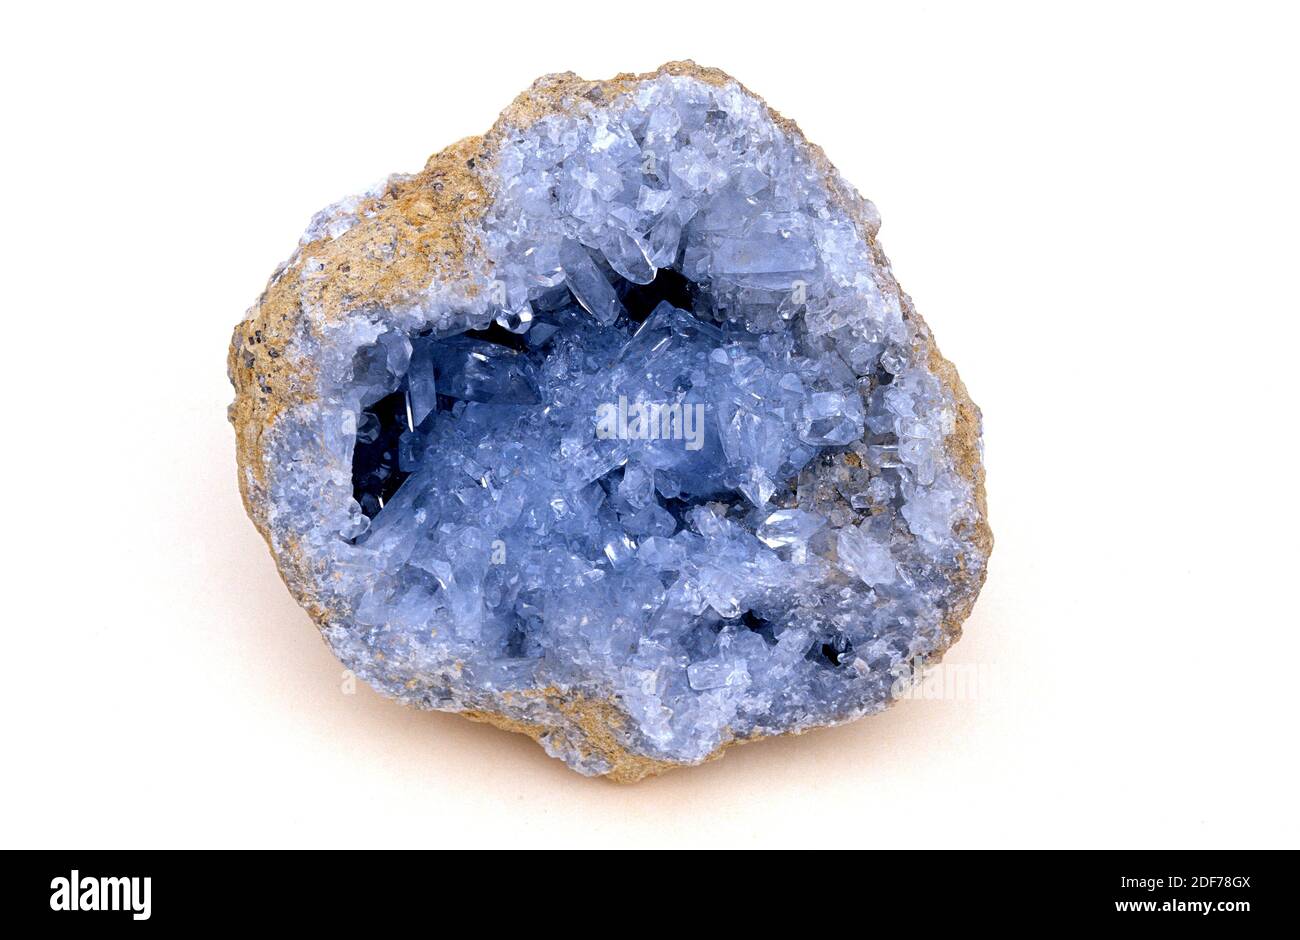 Celestine or celestite is a strontium sulfate mineral. Geode. Stock Photo